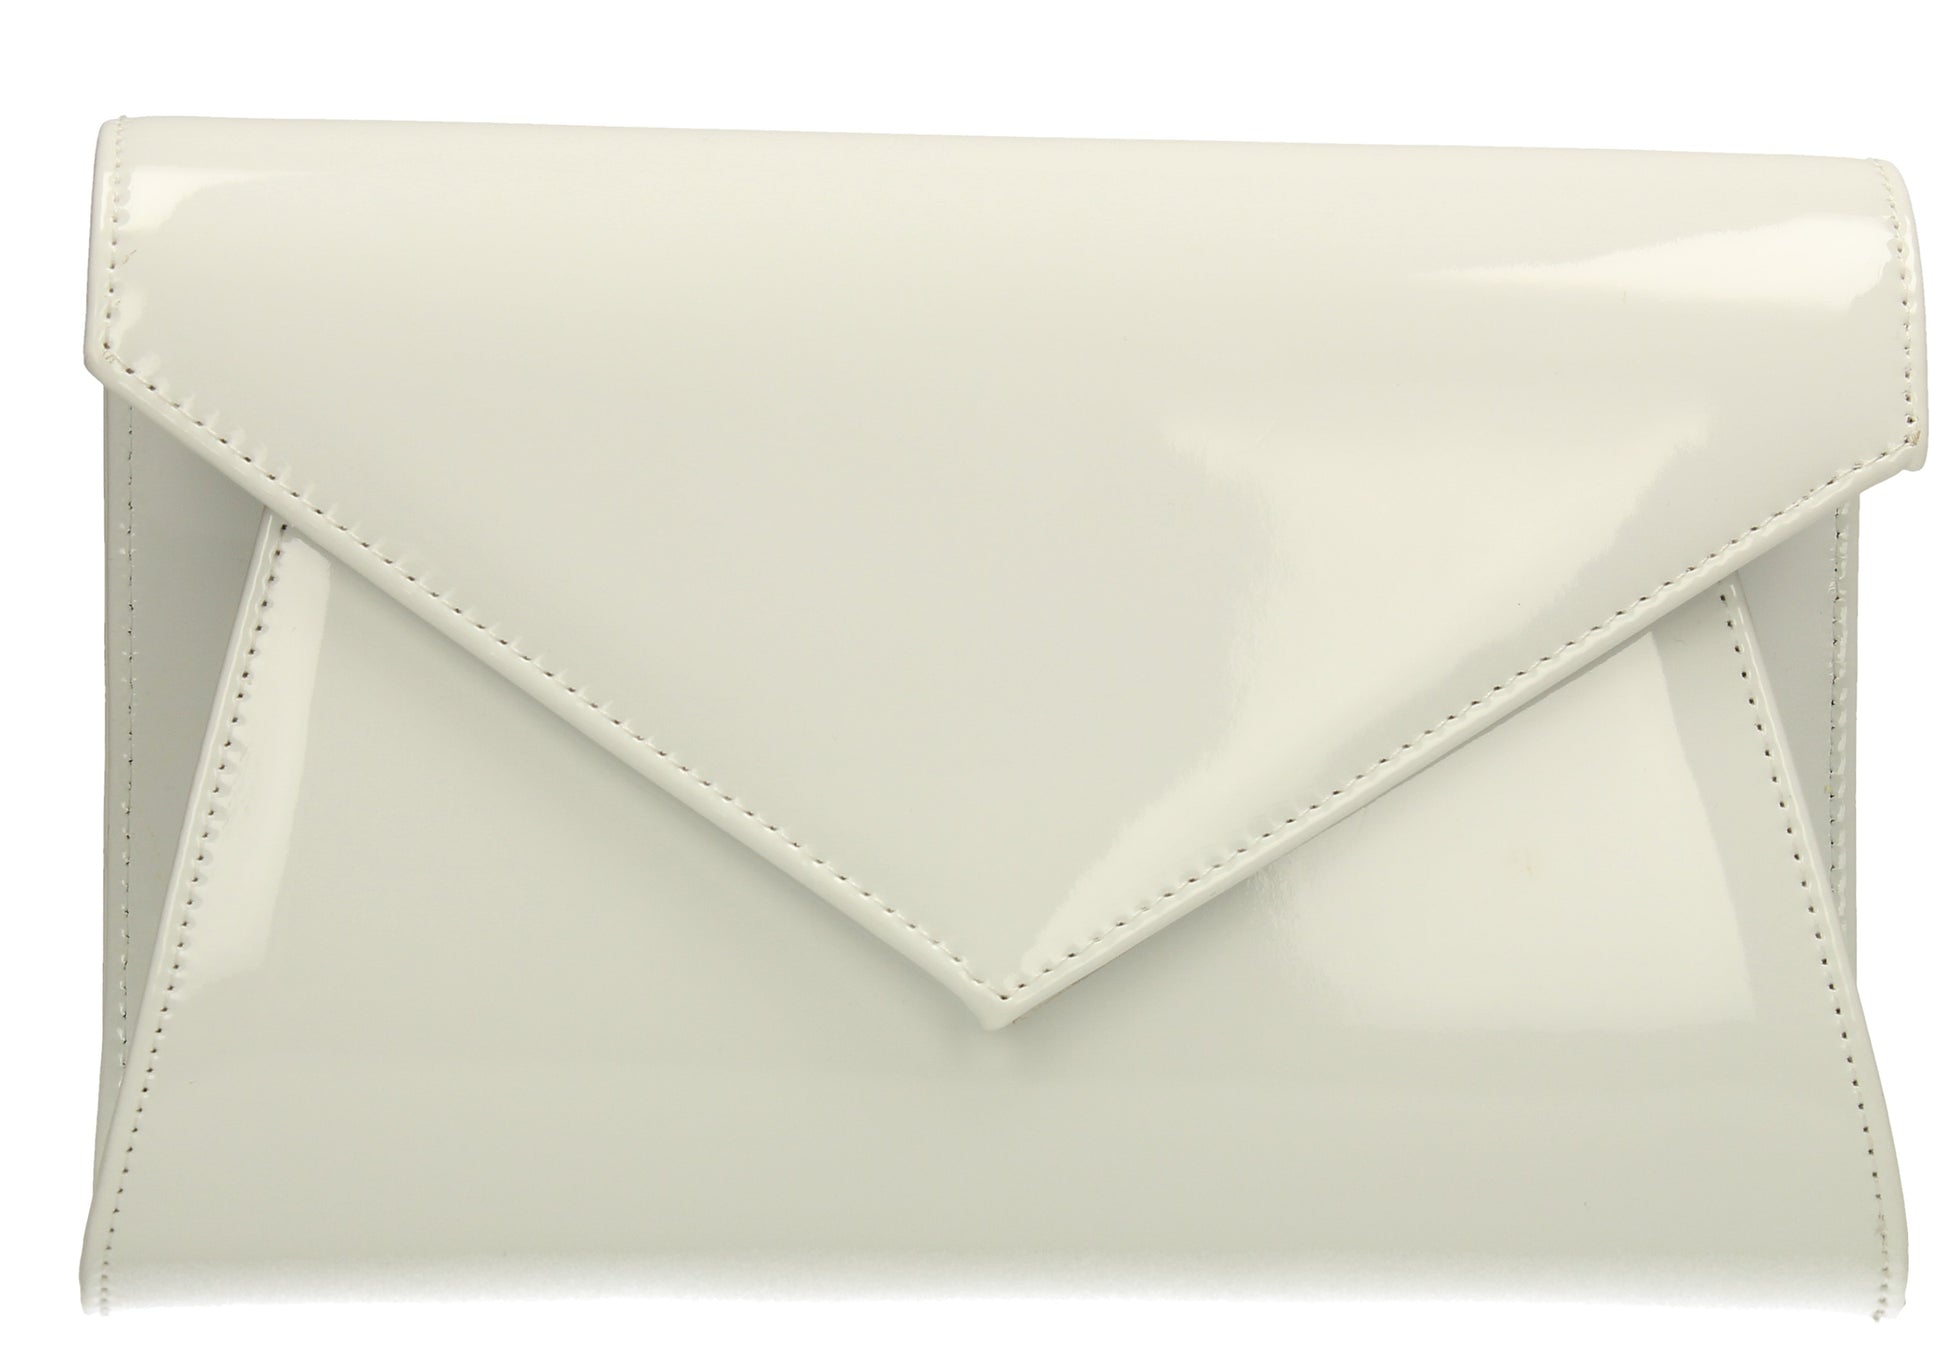 SWANKYSWANS Chrissy Envelope Clutch Bag White Cute Cheap Clutch Bag For Weddings School and Work